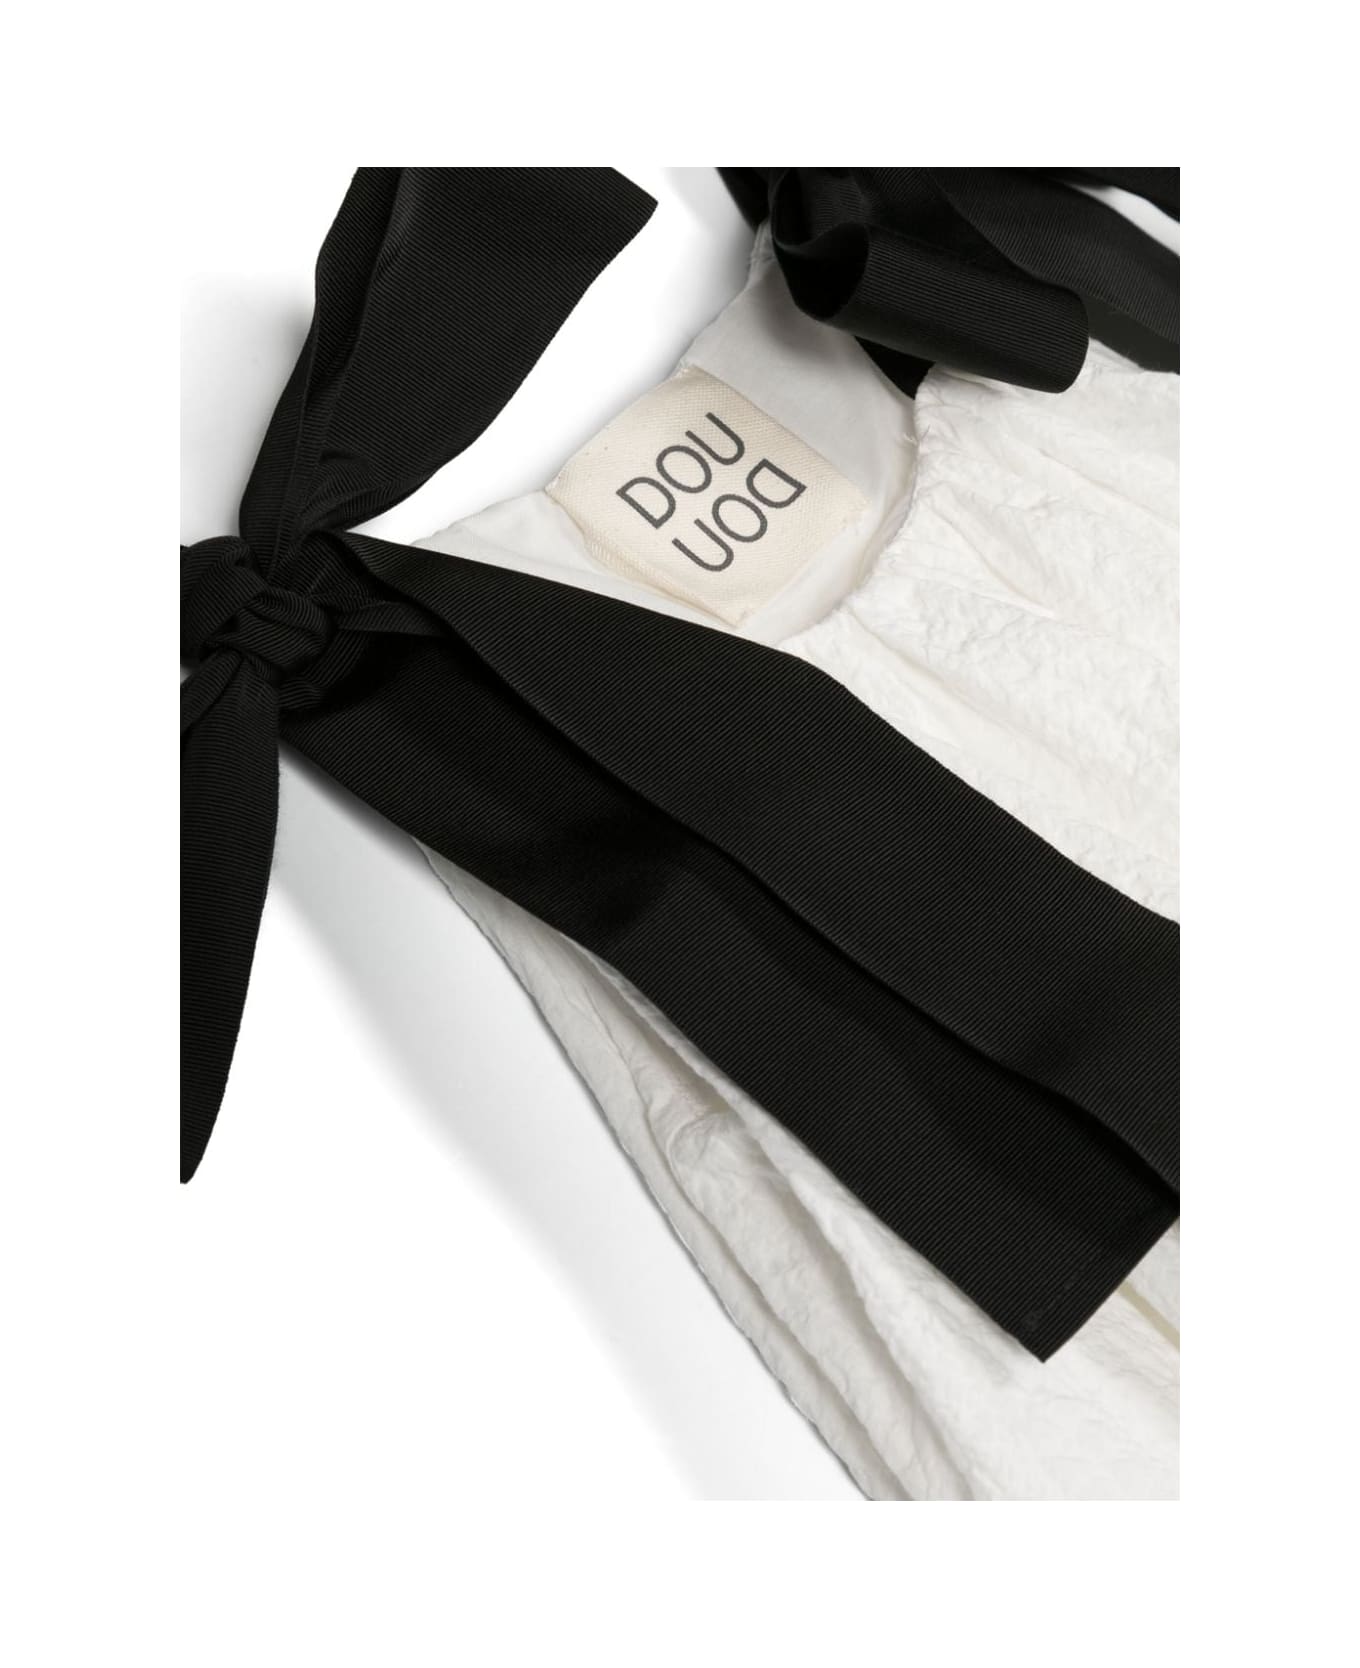 Douuod Long Sleeveless Dress - White ワンピース＆ドレス